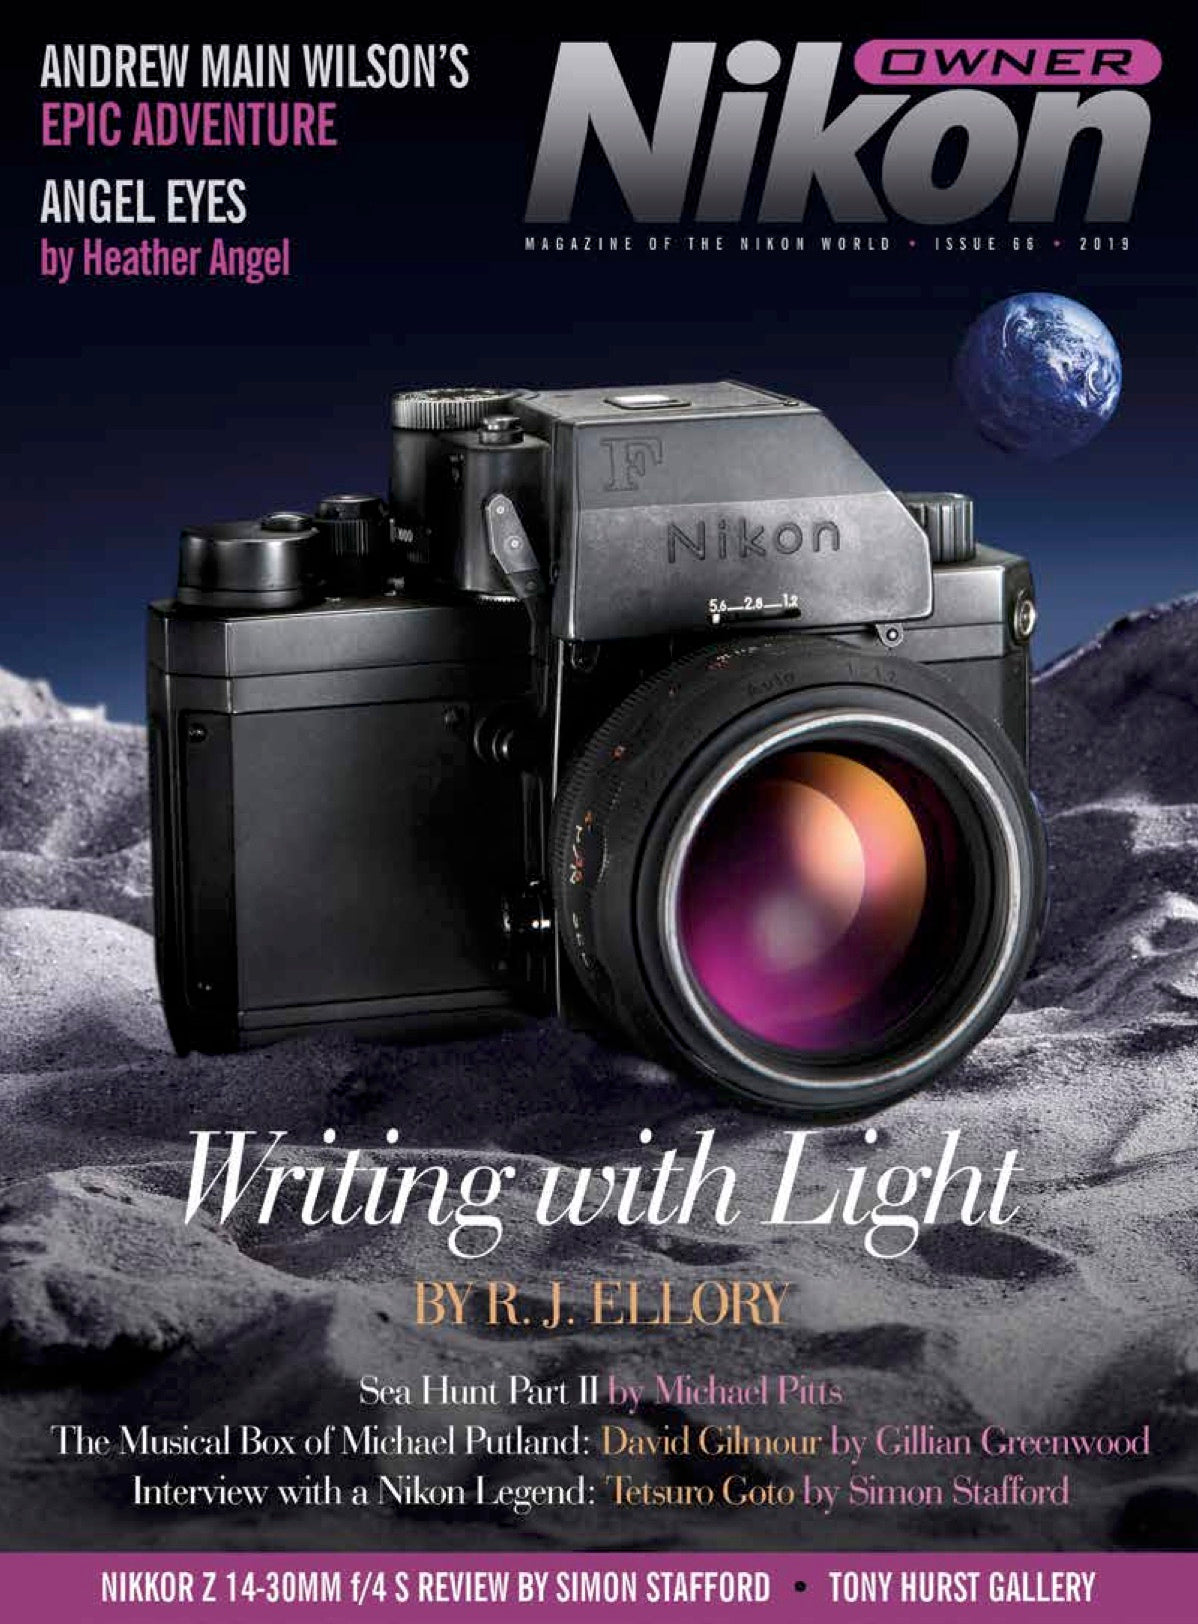 Nikon Owner Magazine issue 66